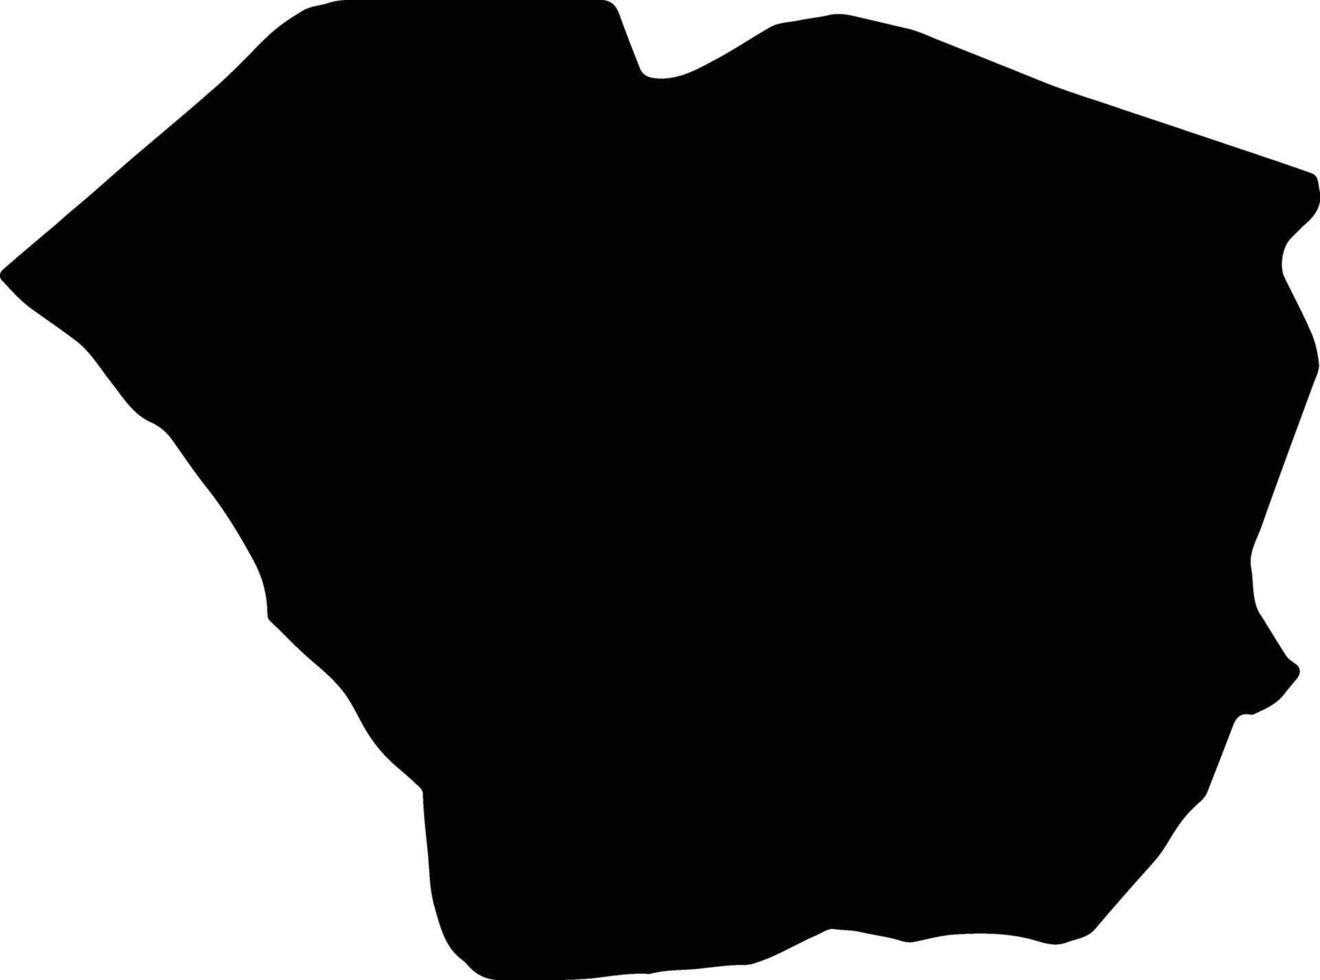 oudalan burkina faso silhouette carta geografica vettore